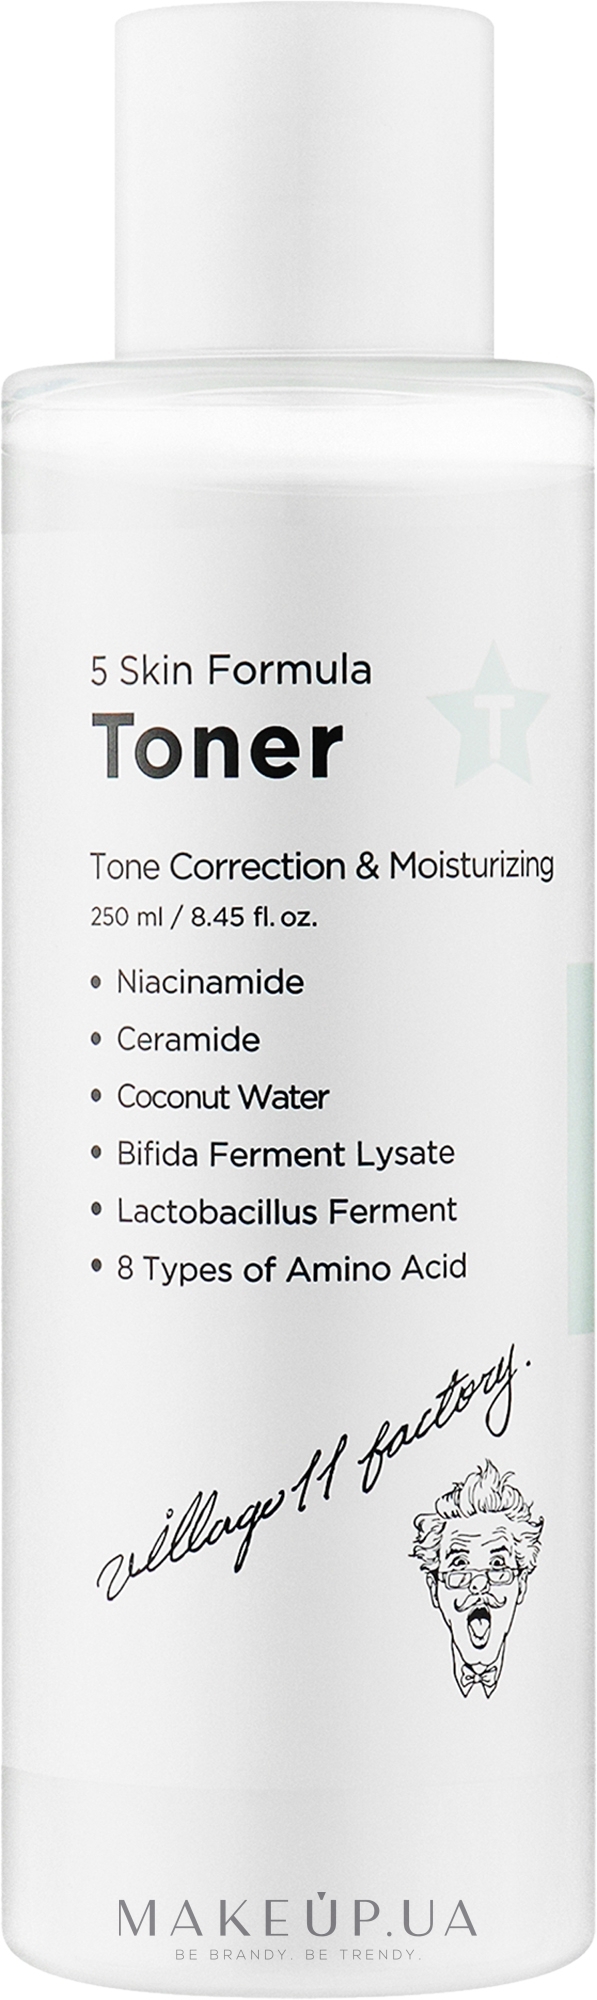 Тонер для лица - Village 11 Factory T Skin Formula Toner — фото 250ml